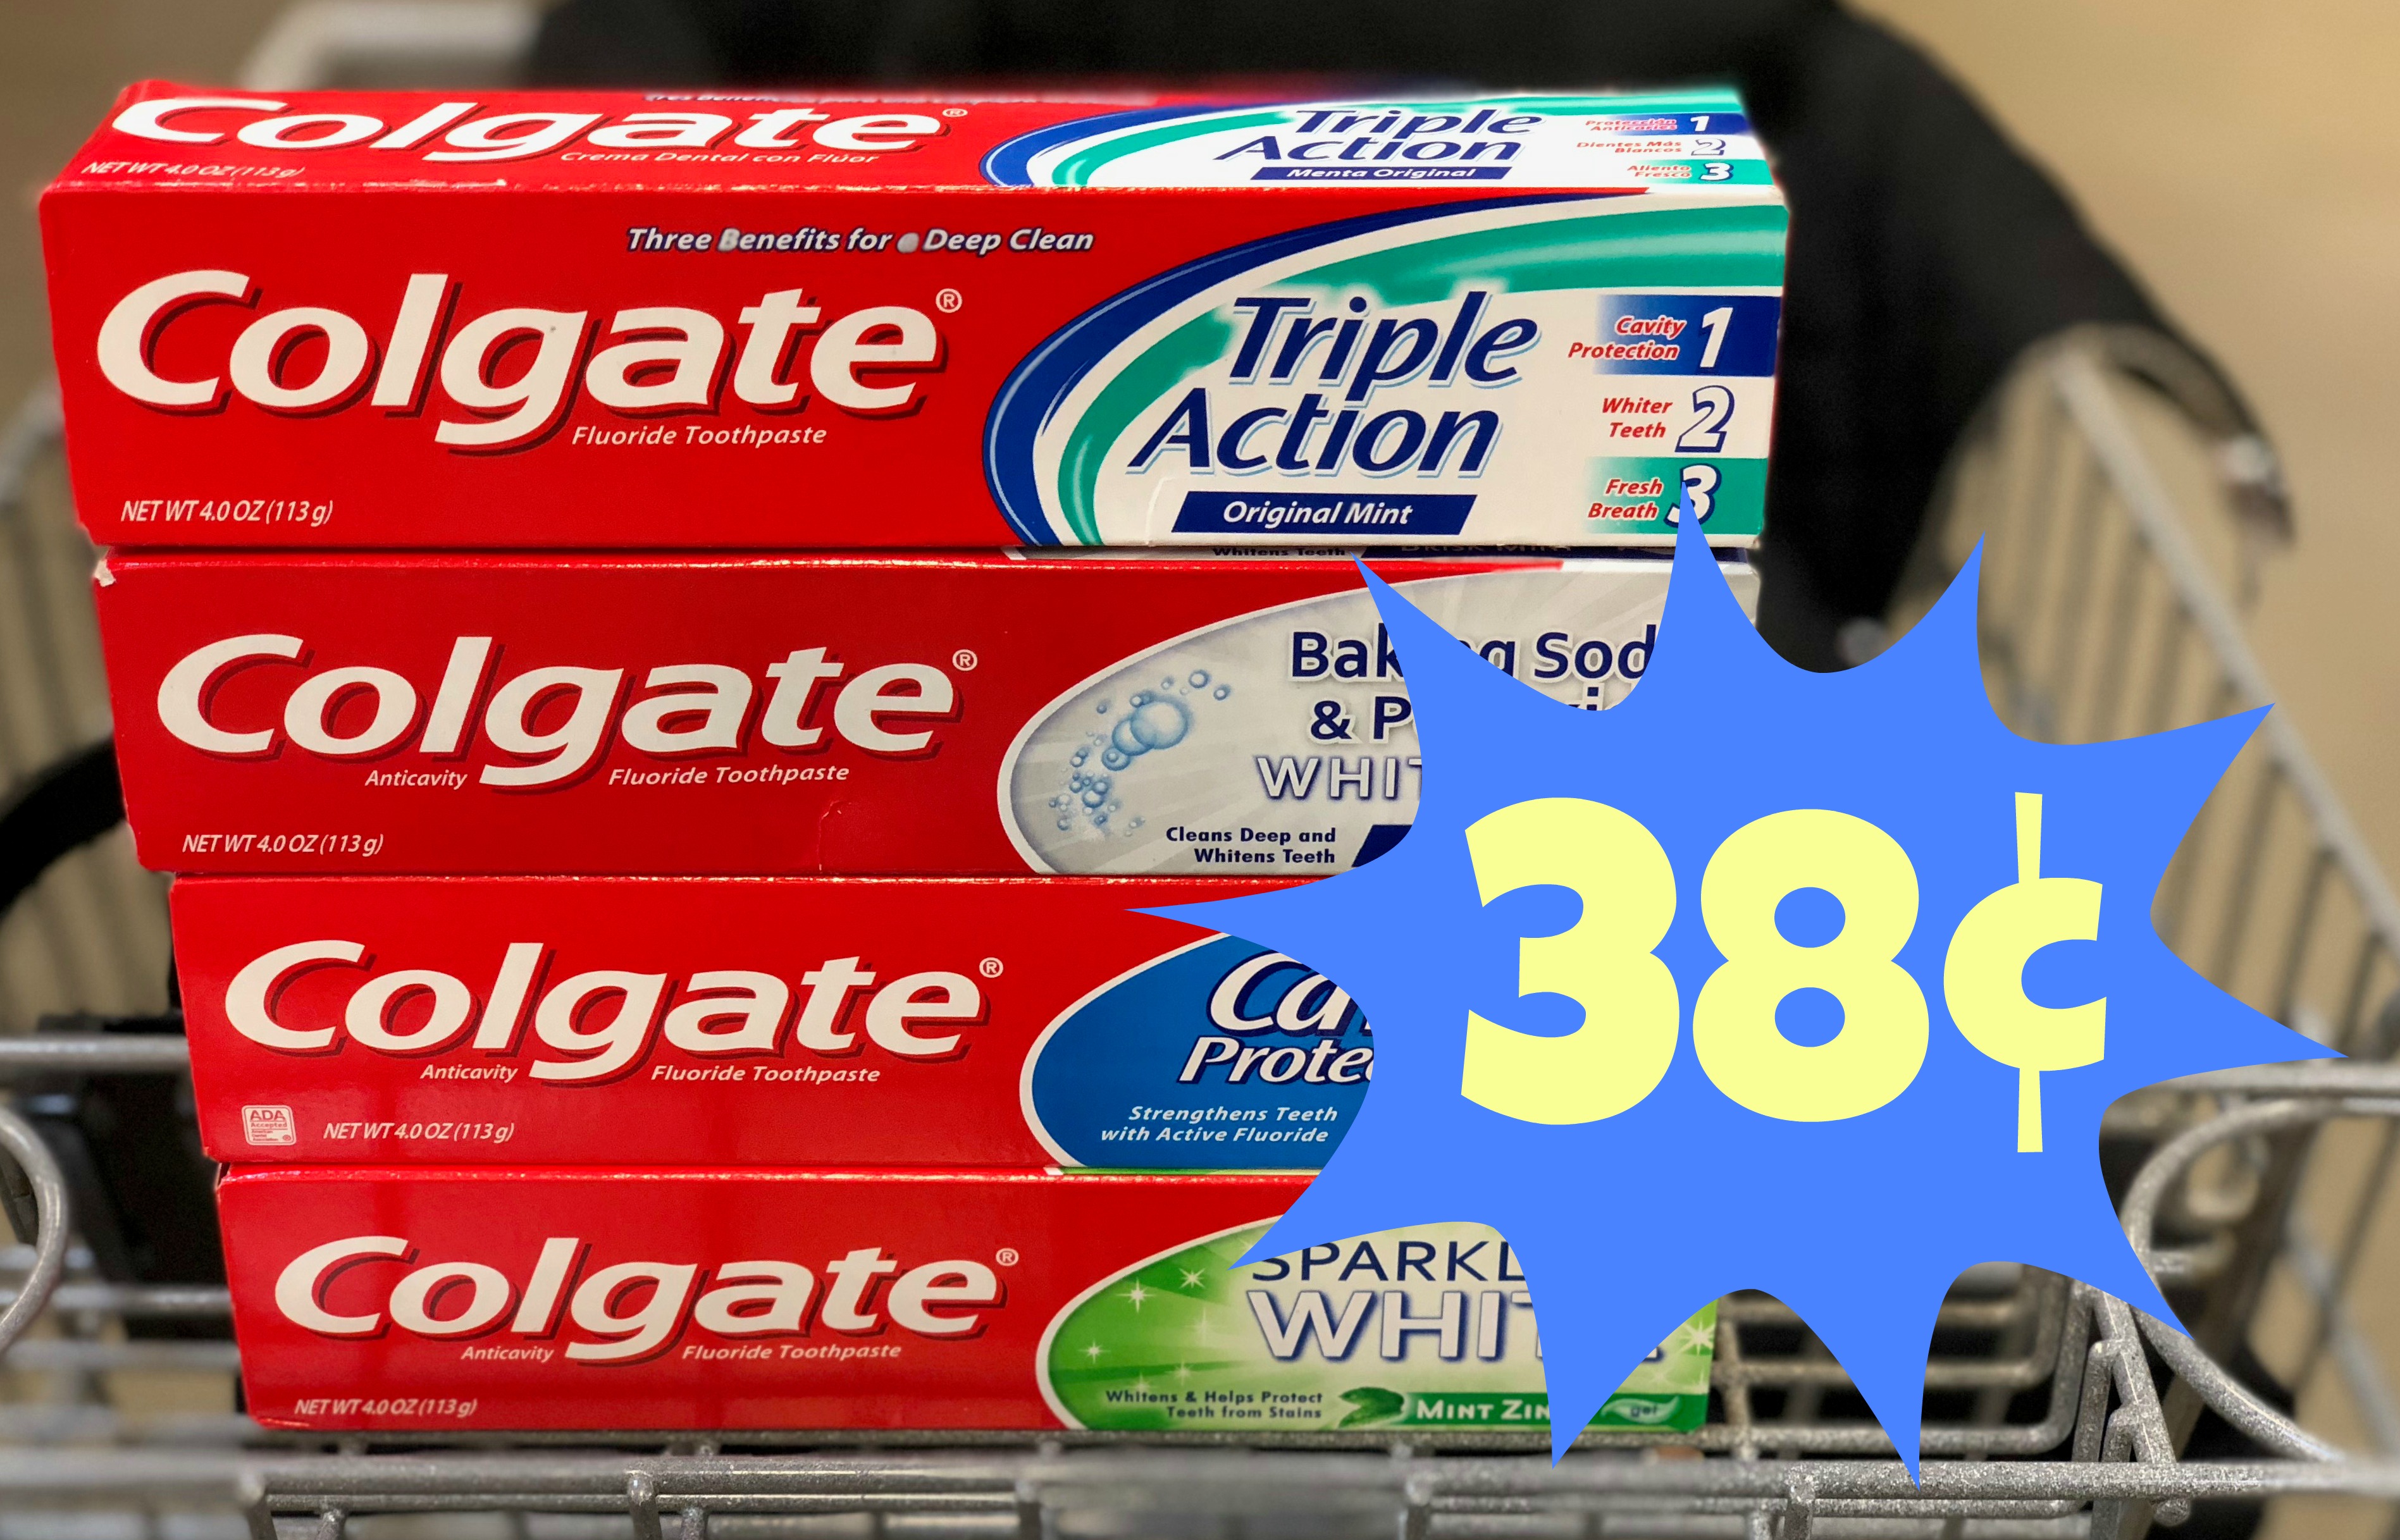 NEW Colgate Coupons Toothpaste ONLY 0.38 at Kroger!! Kroger Krazy